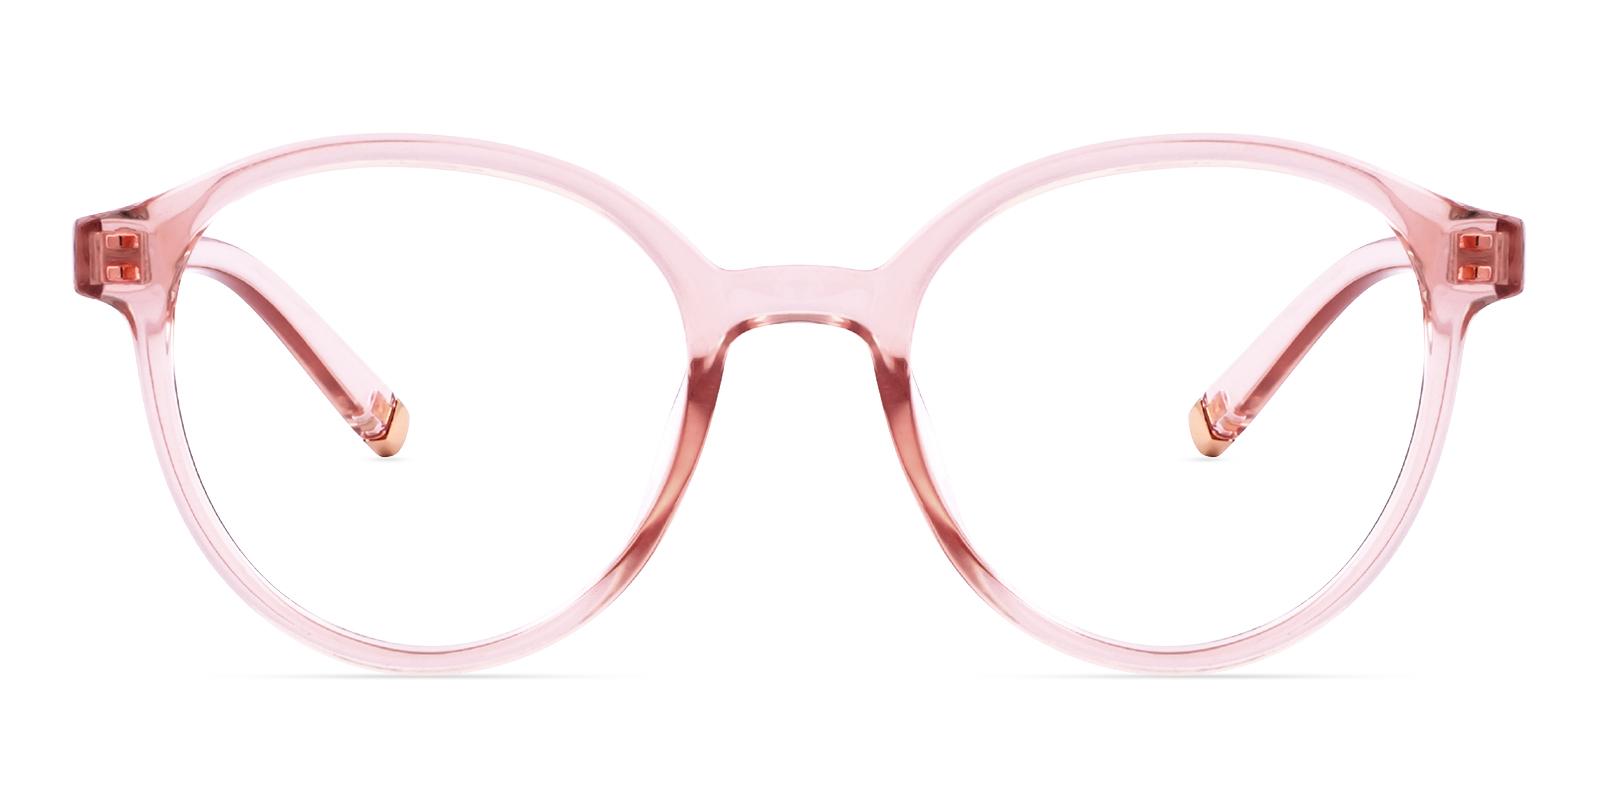 Anguatic Pink Plastic Eyeglasses , UniversalBridgeFit Frames from ABBE Glasses